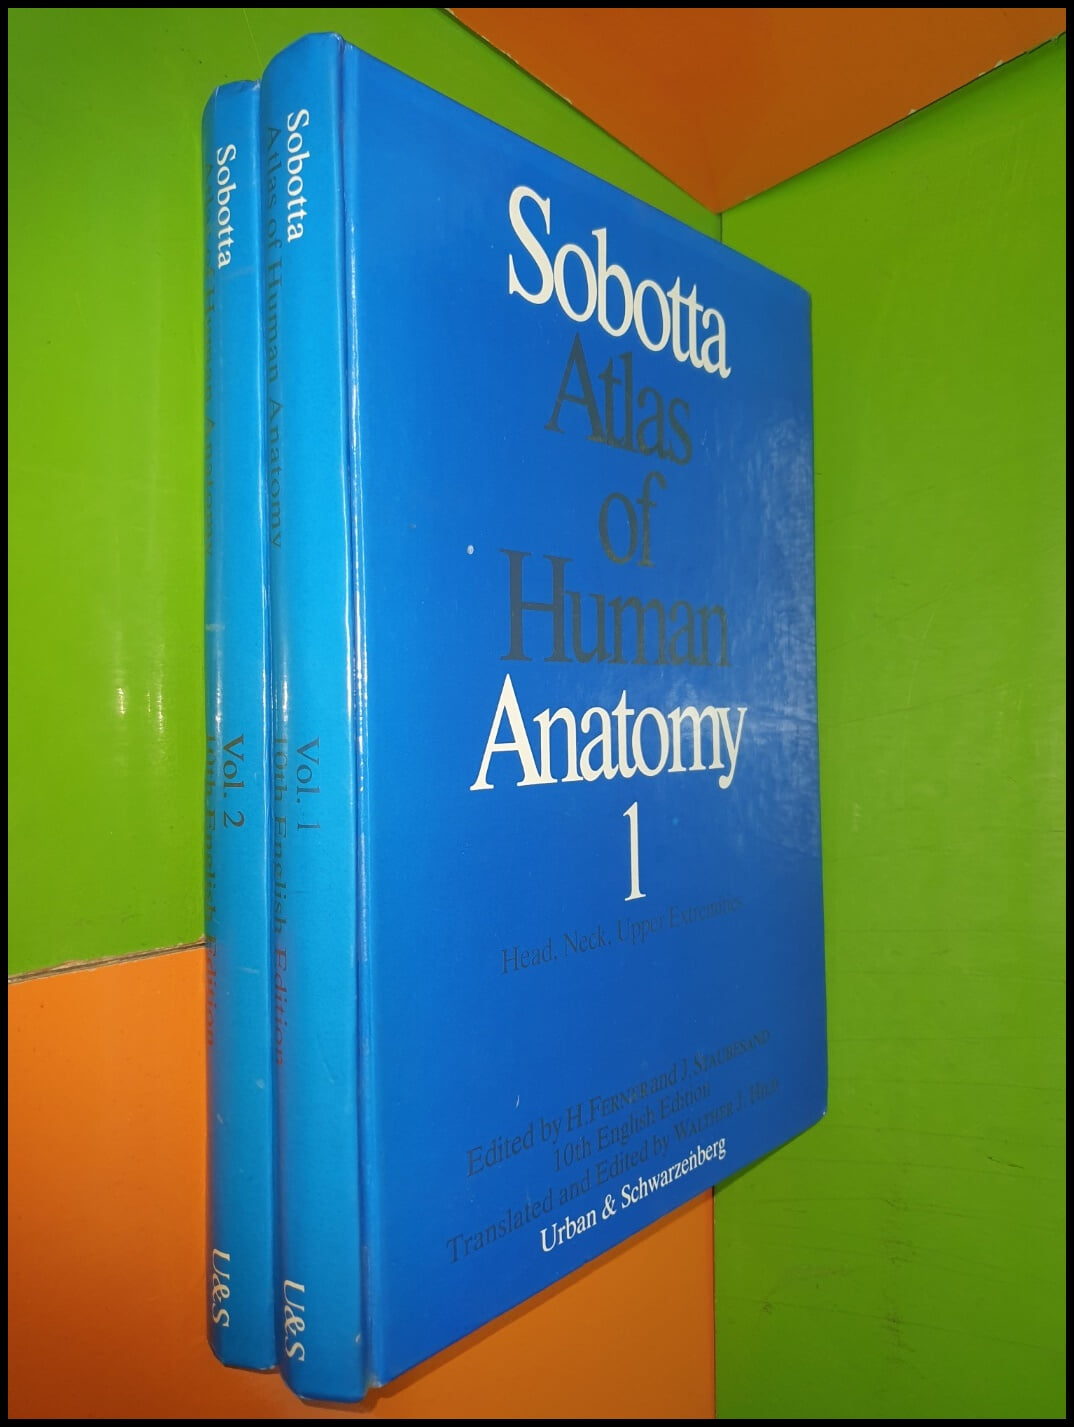 Sobotta Atlas of Human Anatomy 1,2권(전2권/10th English Edition)